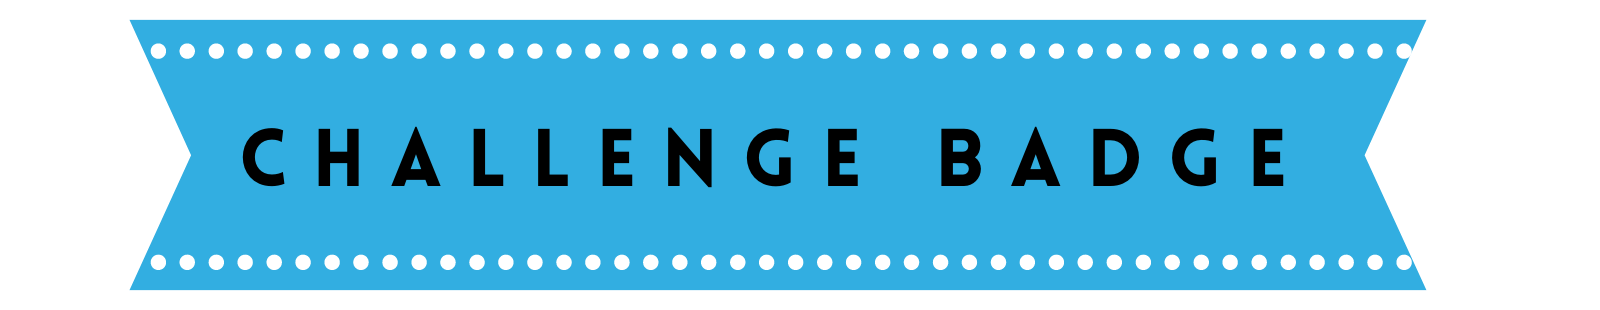 challenge badge